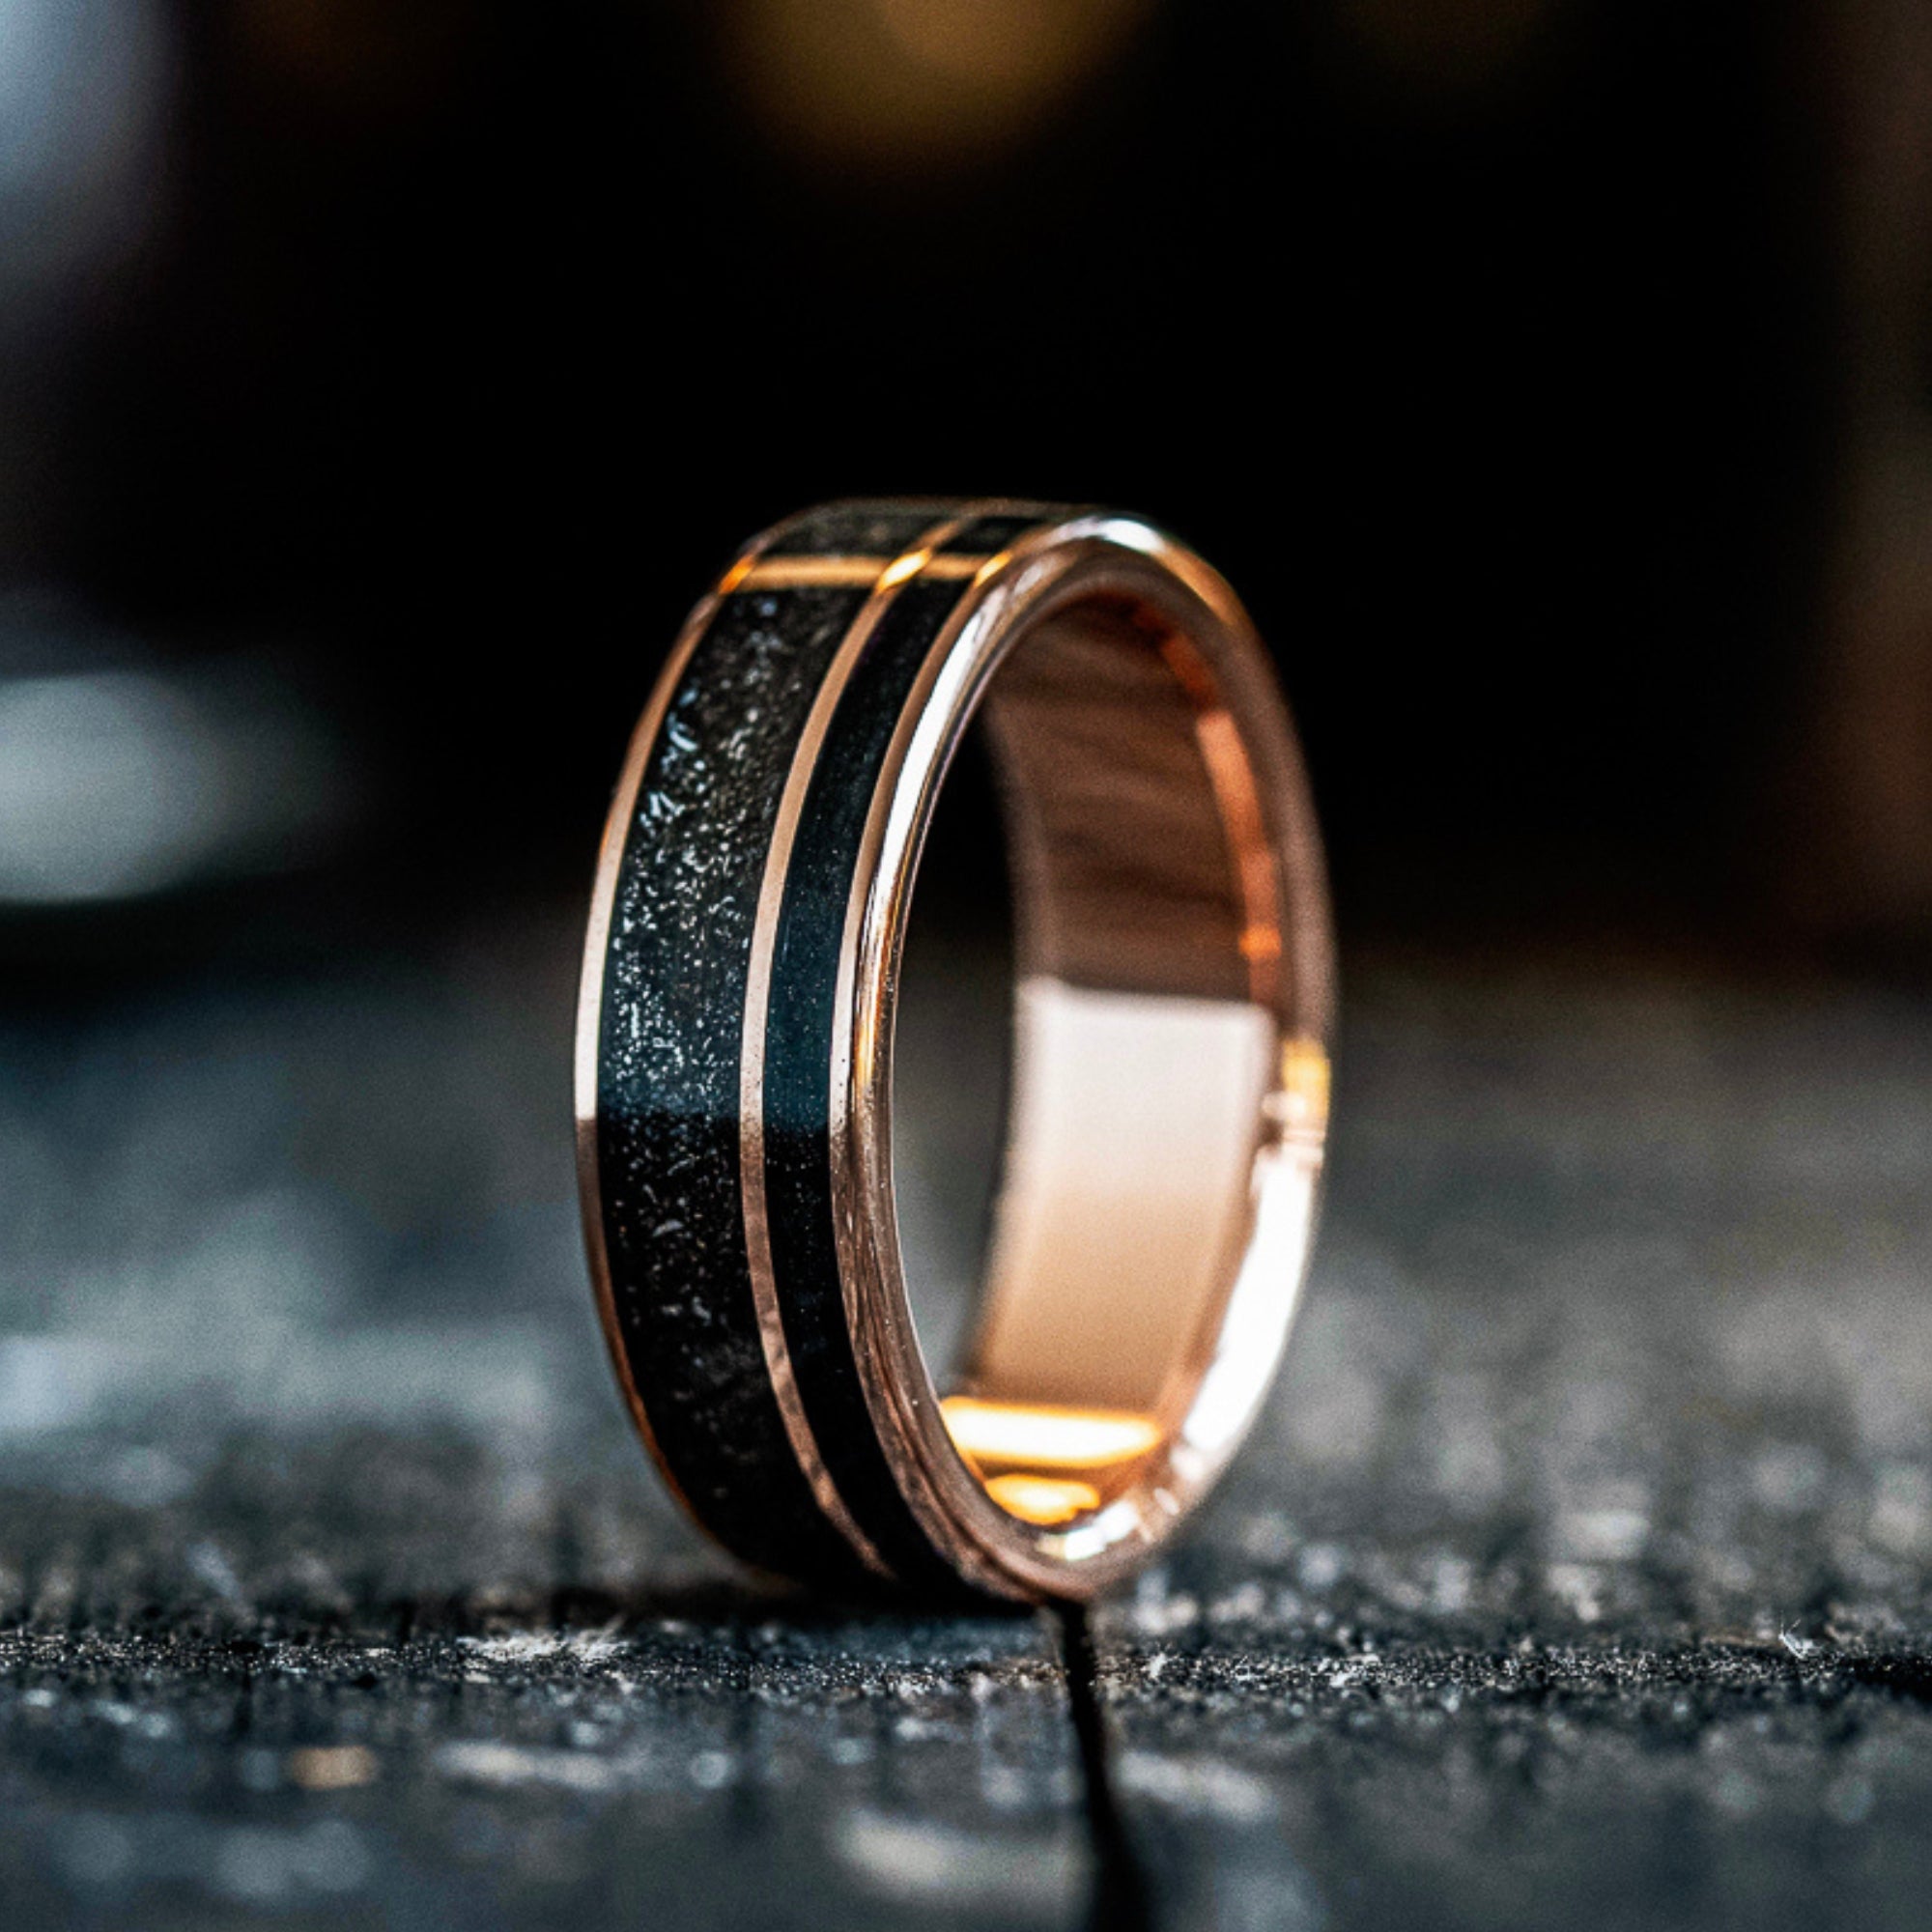 Men's Rings: Gold, Silver, & Black Rings